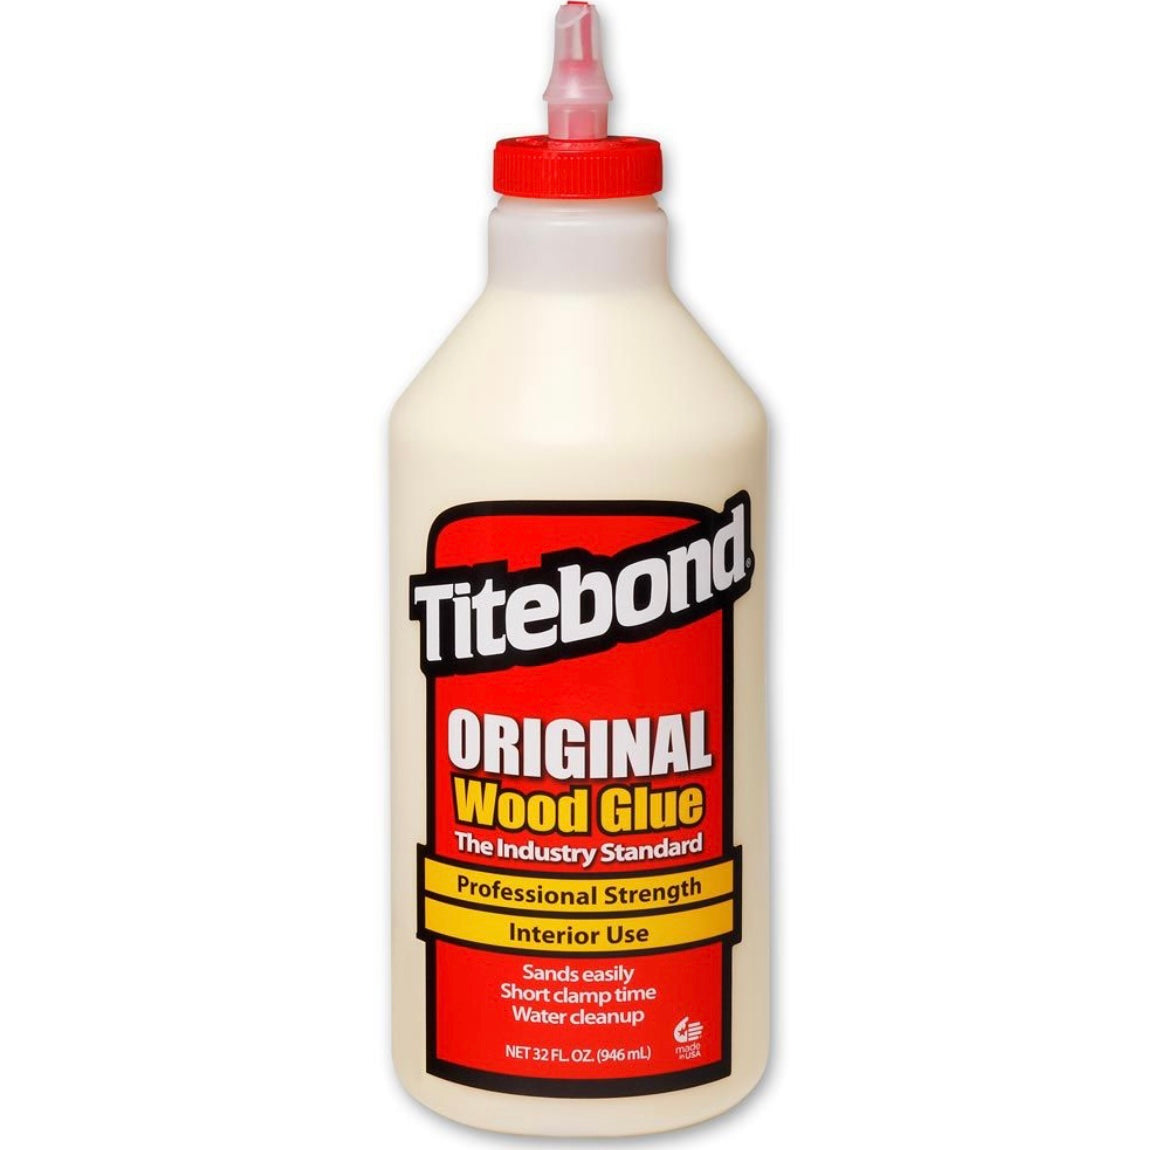 Titebond Original Wood Glue